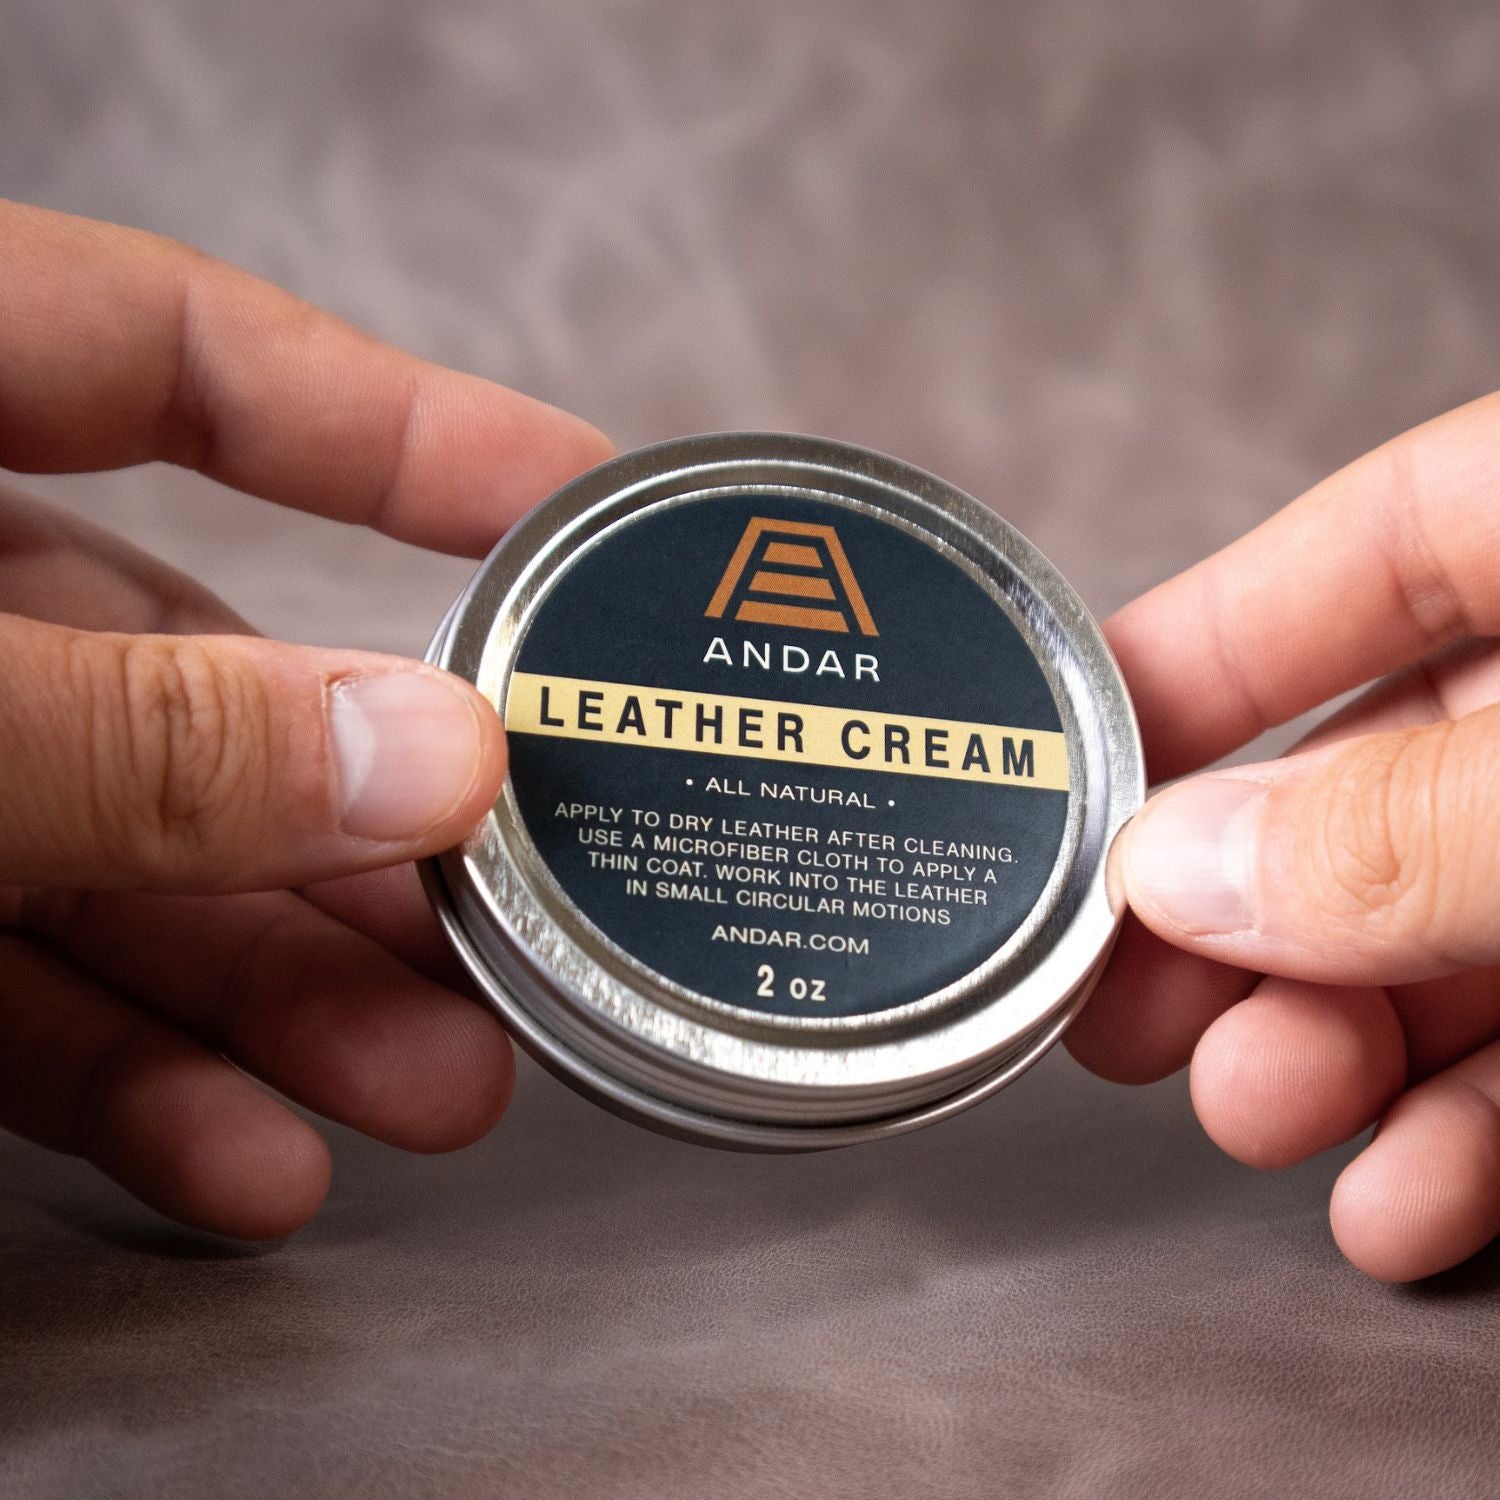 The Leather Cream